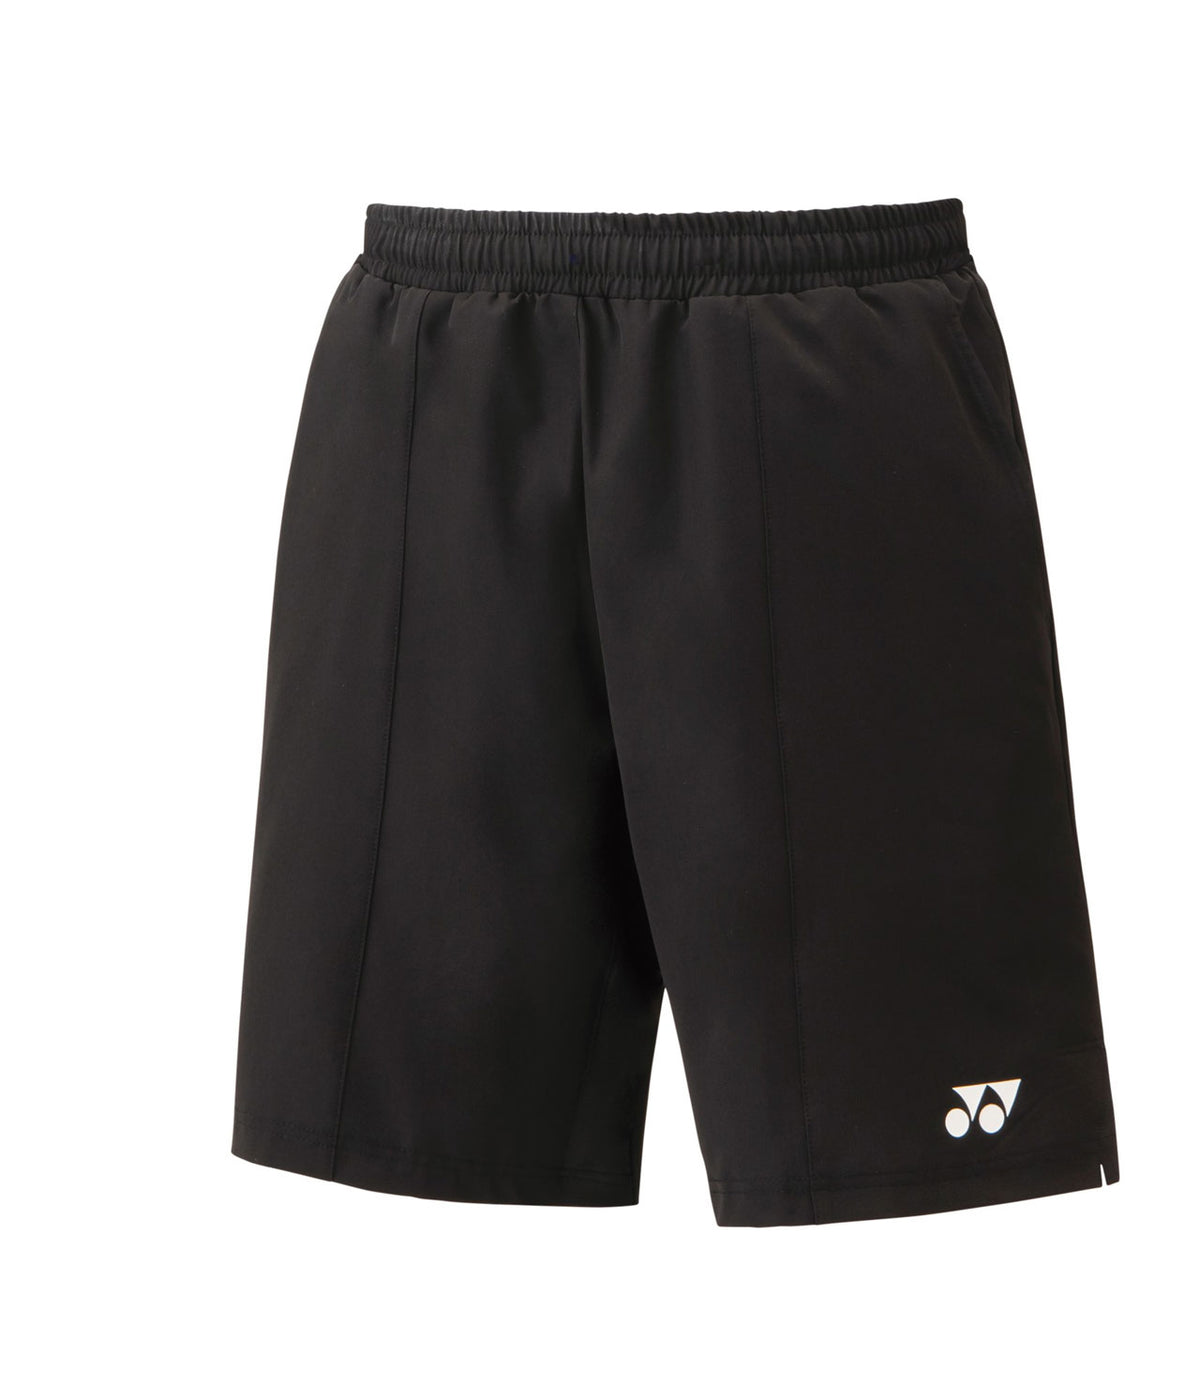 Yonex 15134 Shorts Mens (Black)